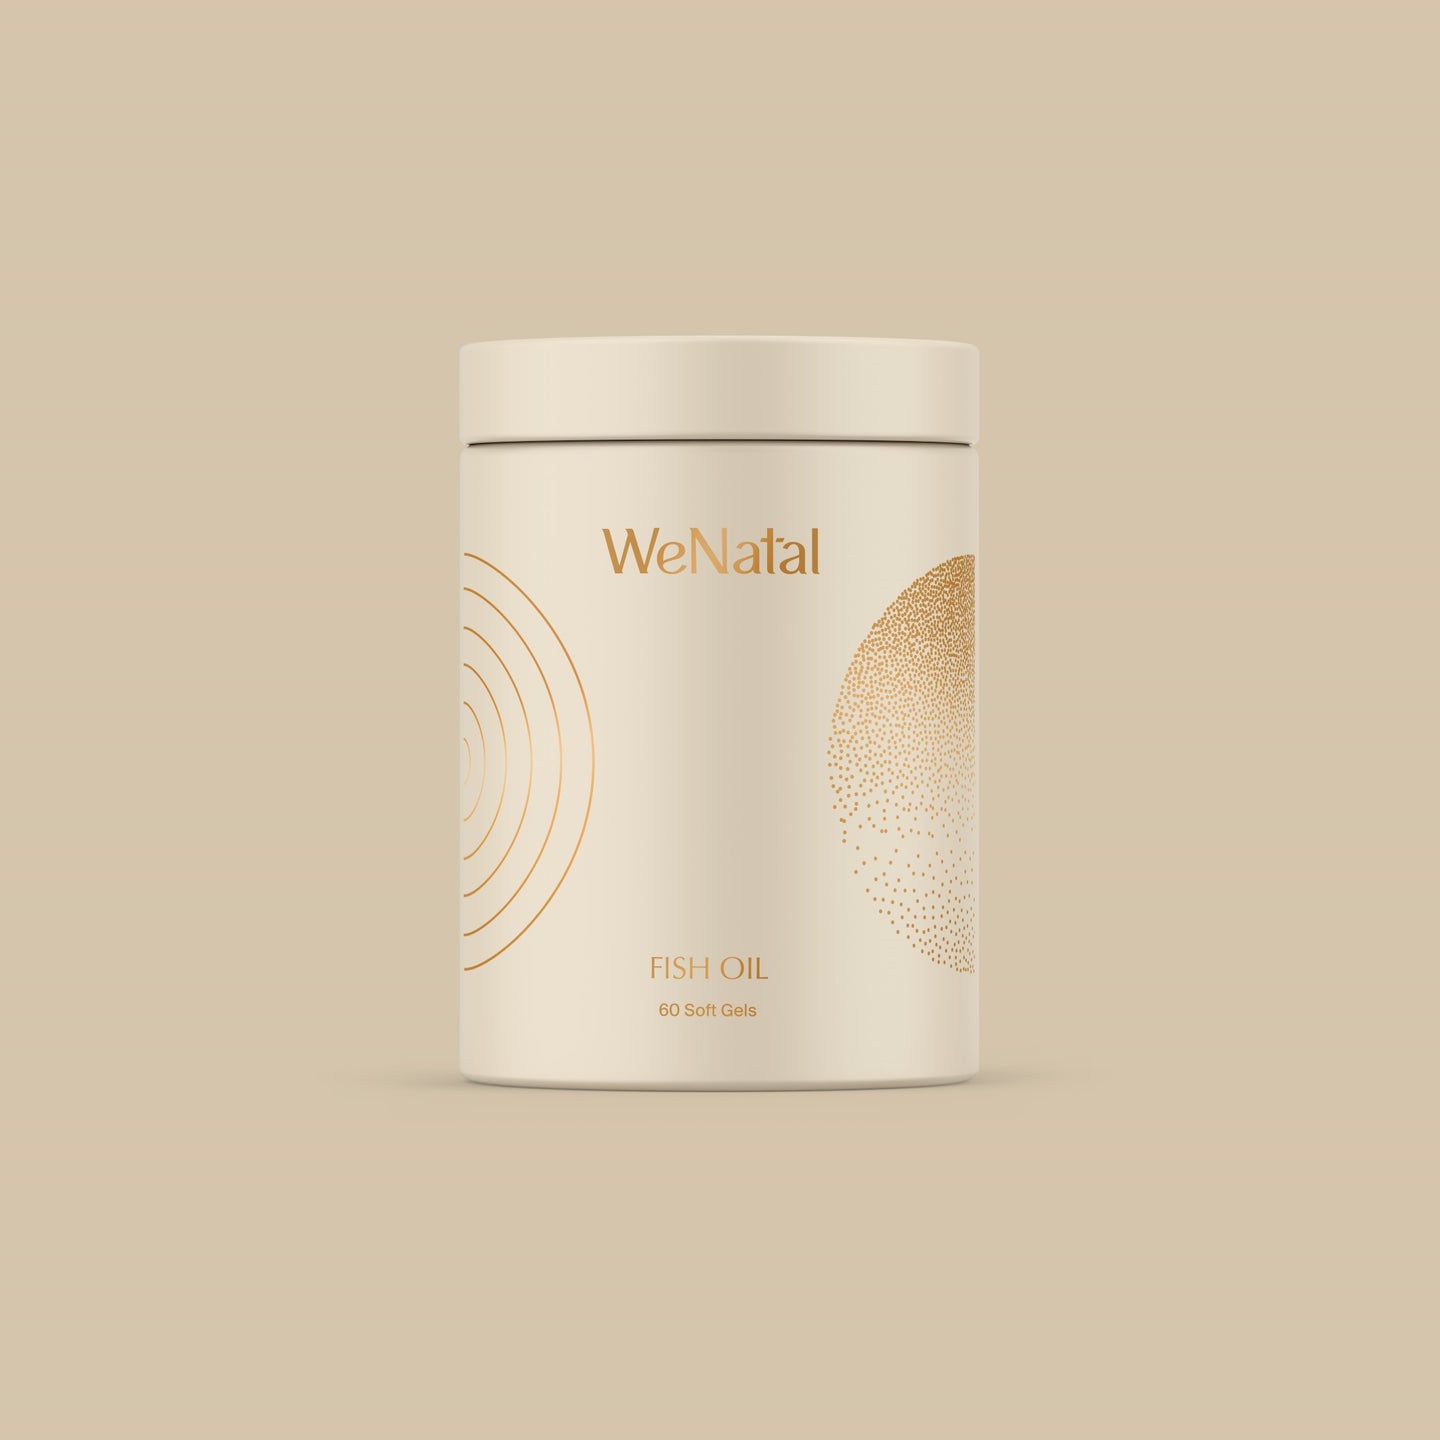 A jar of WeNatal Fish Oil supplement against beige background